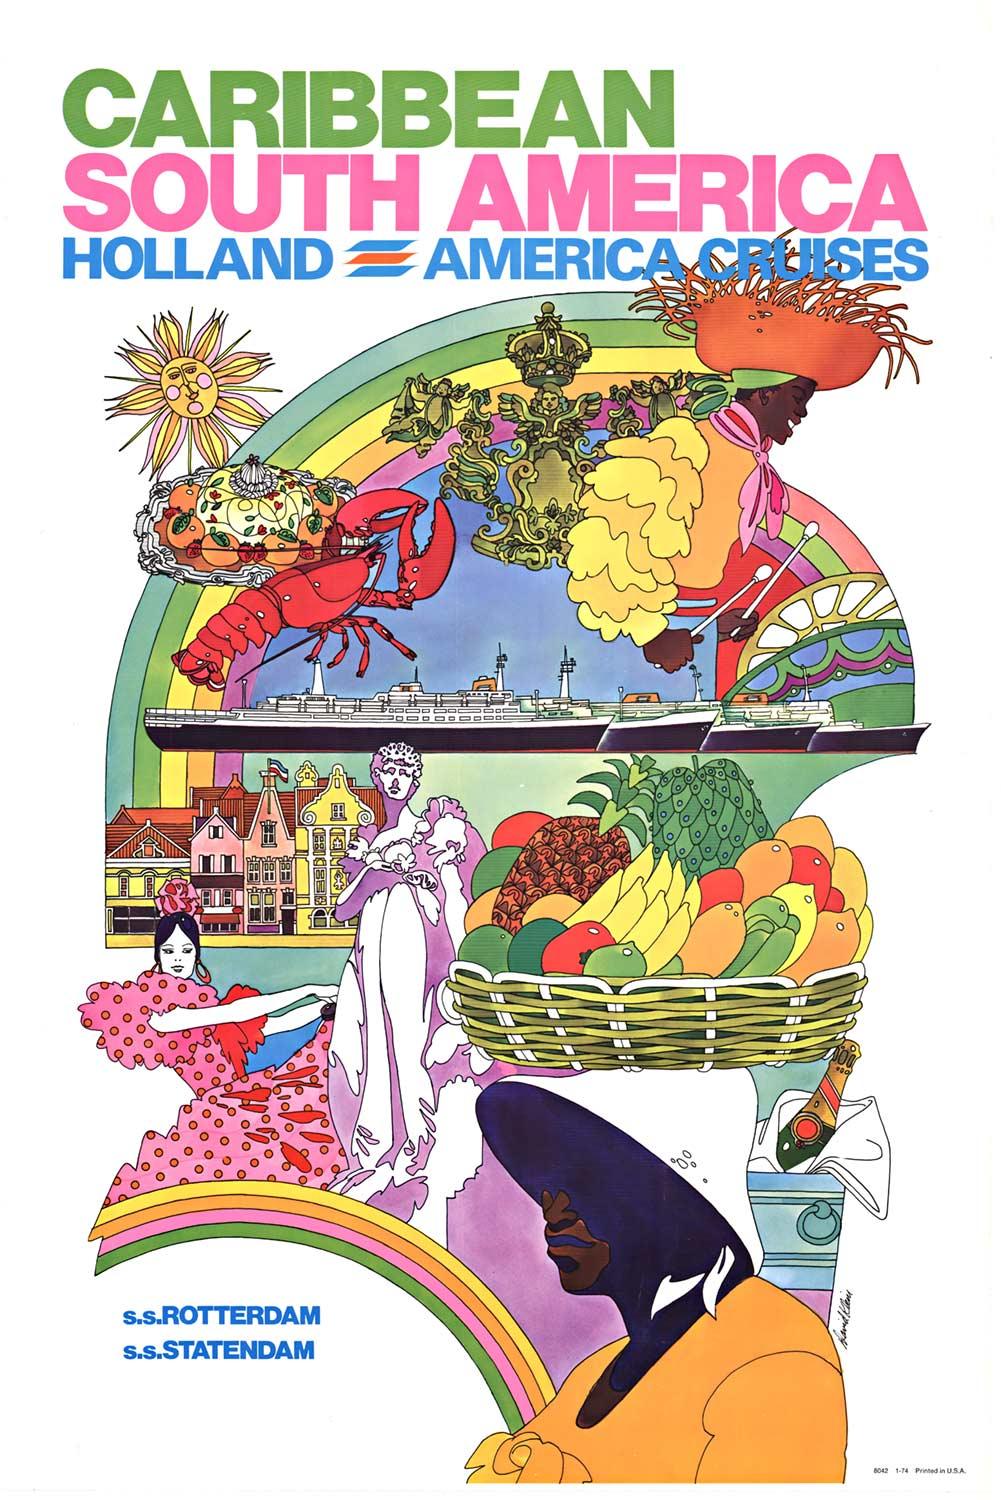 David Klein Landscape Print - Original Caribbean - South America Cruise vintage travel poster